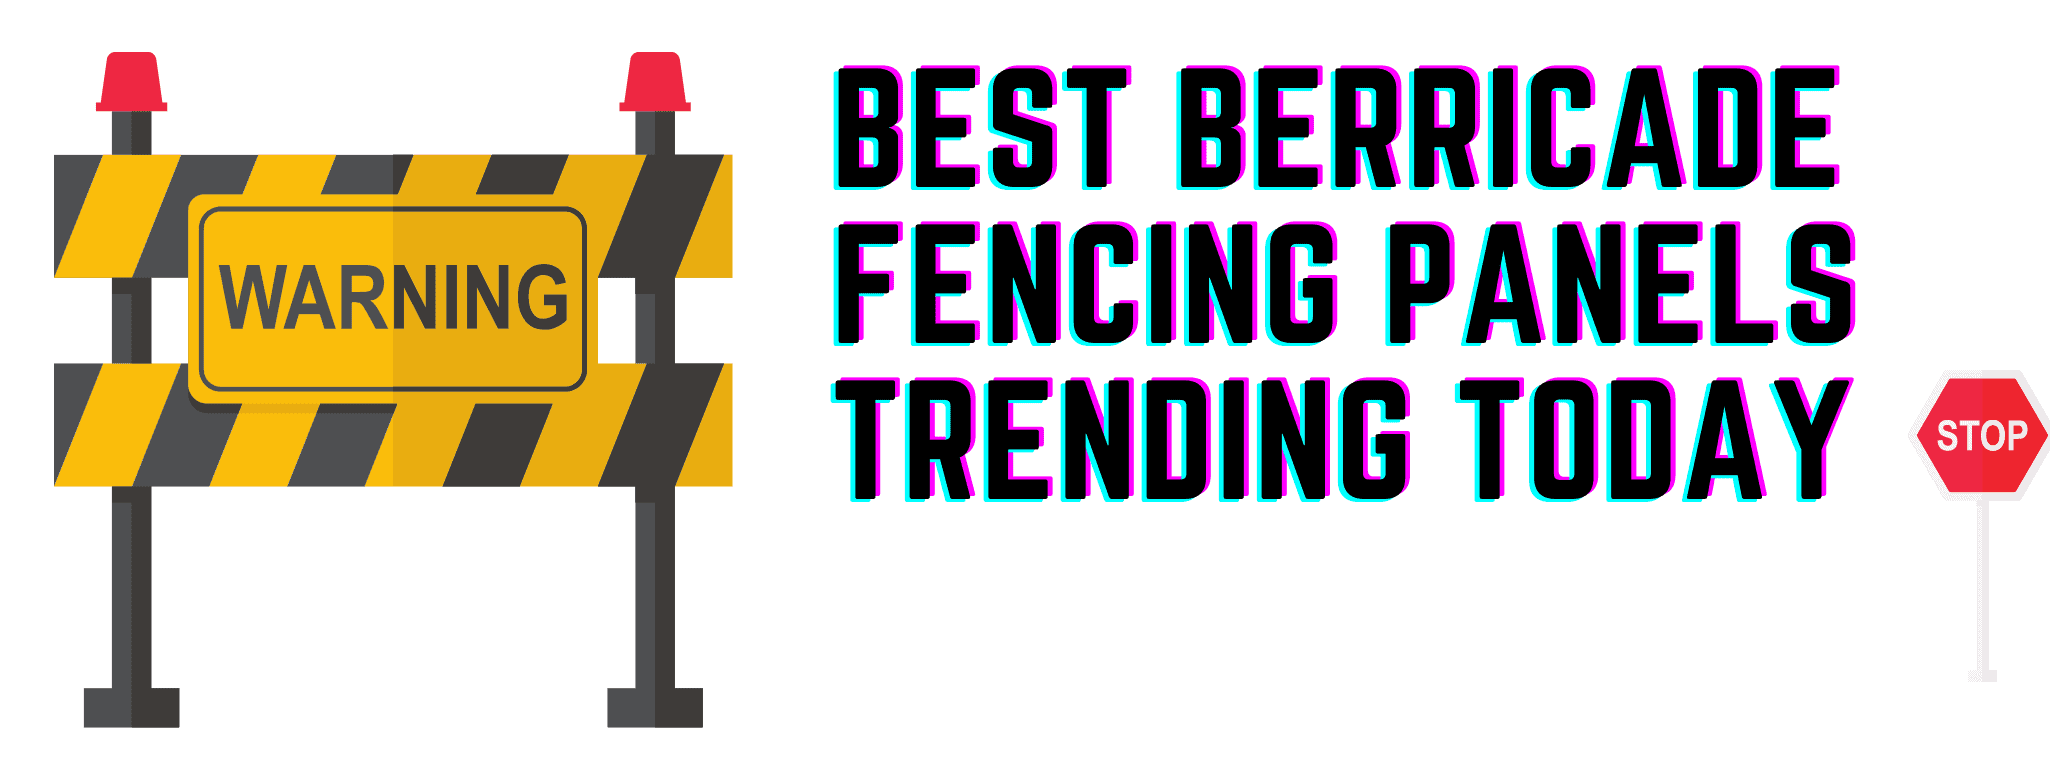 Best Barricade fencing panels